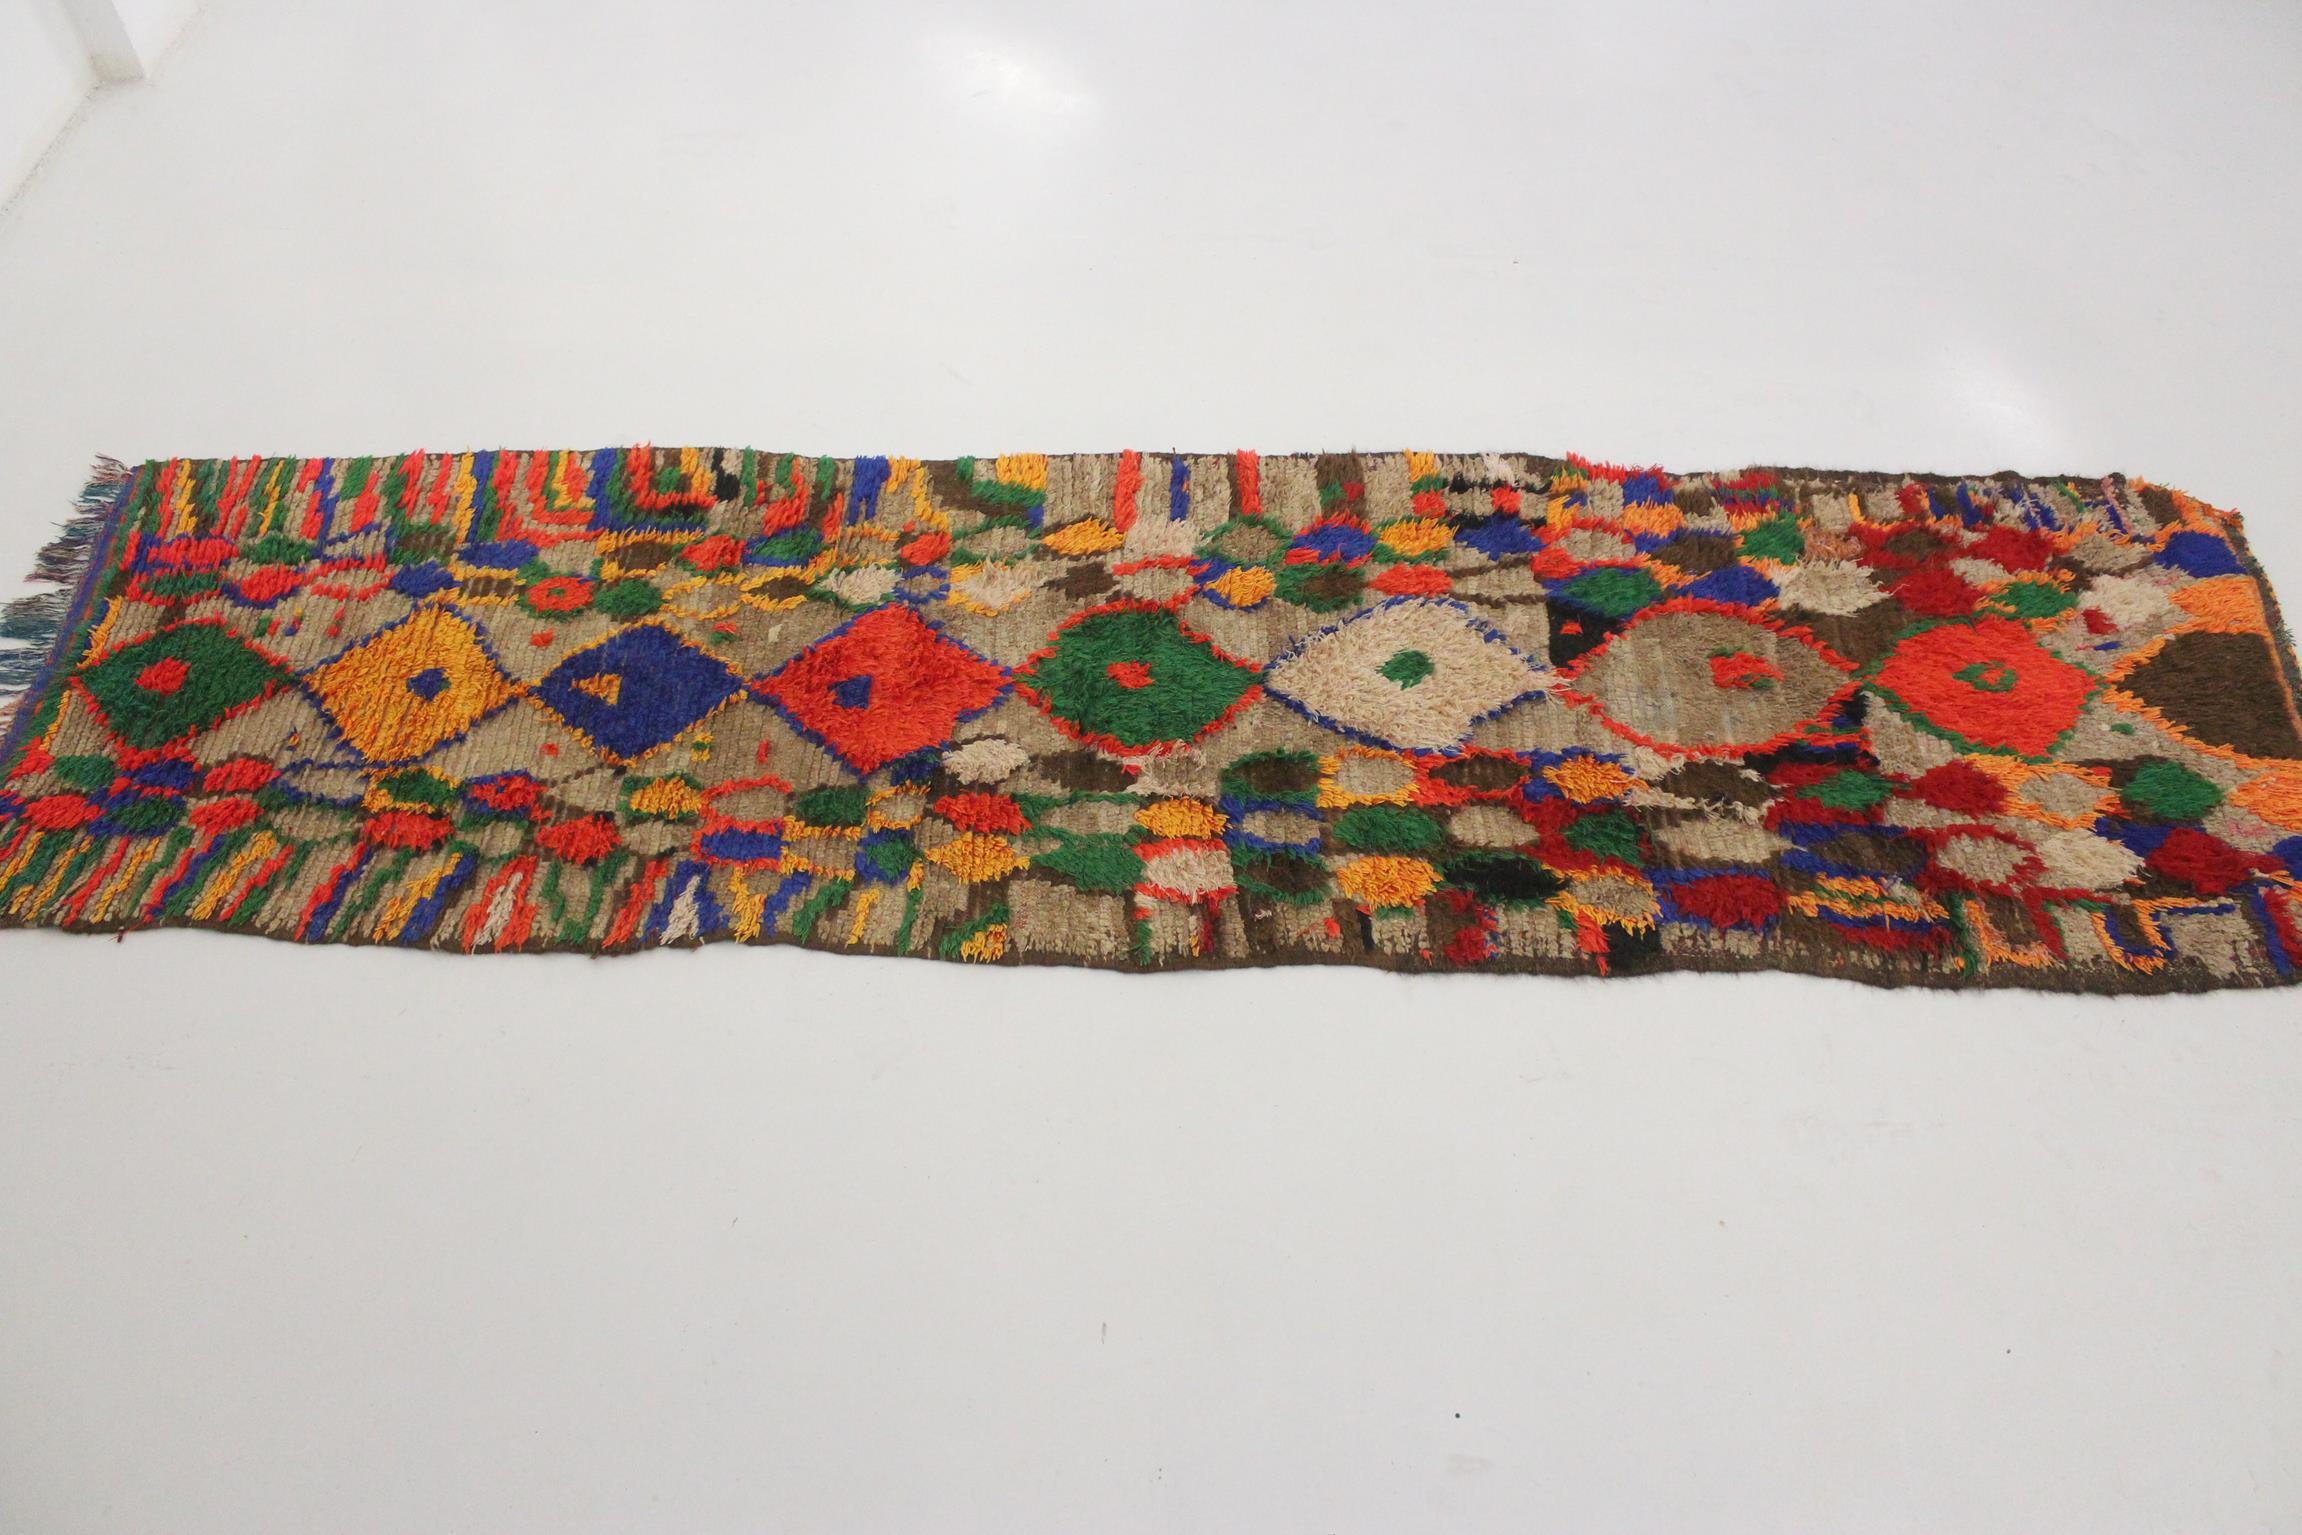 Vintage Moroccan Boujad runner rug - Brown/multicolor - 3.6x12.3feet / 109x377cm For Sale 6